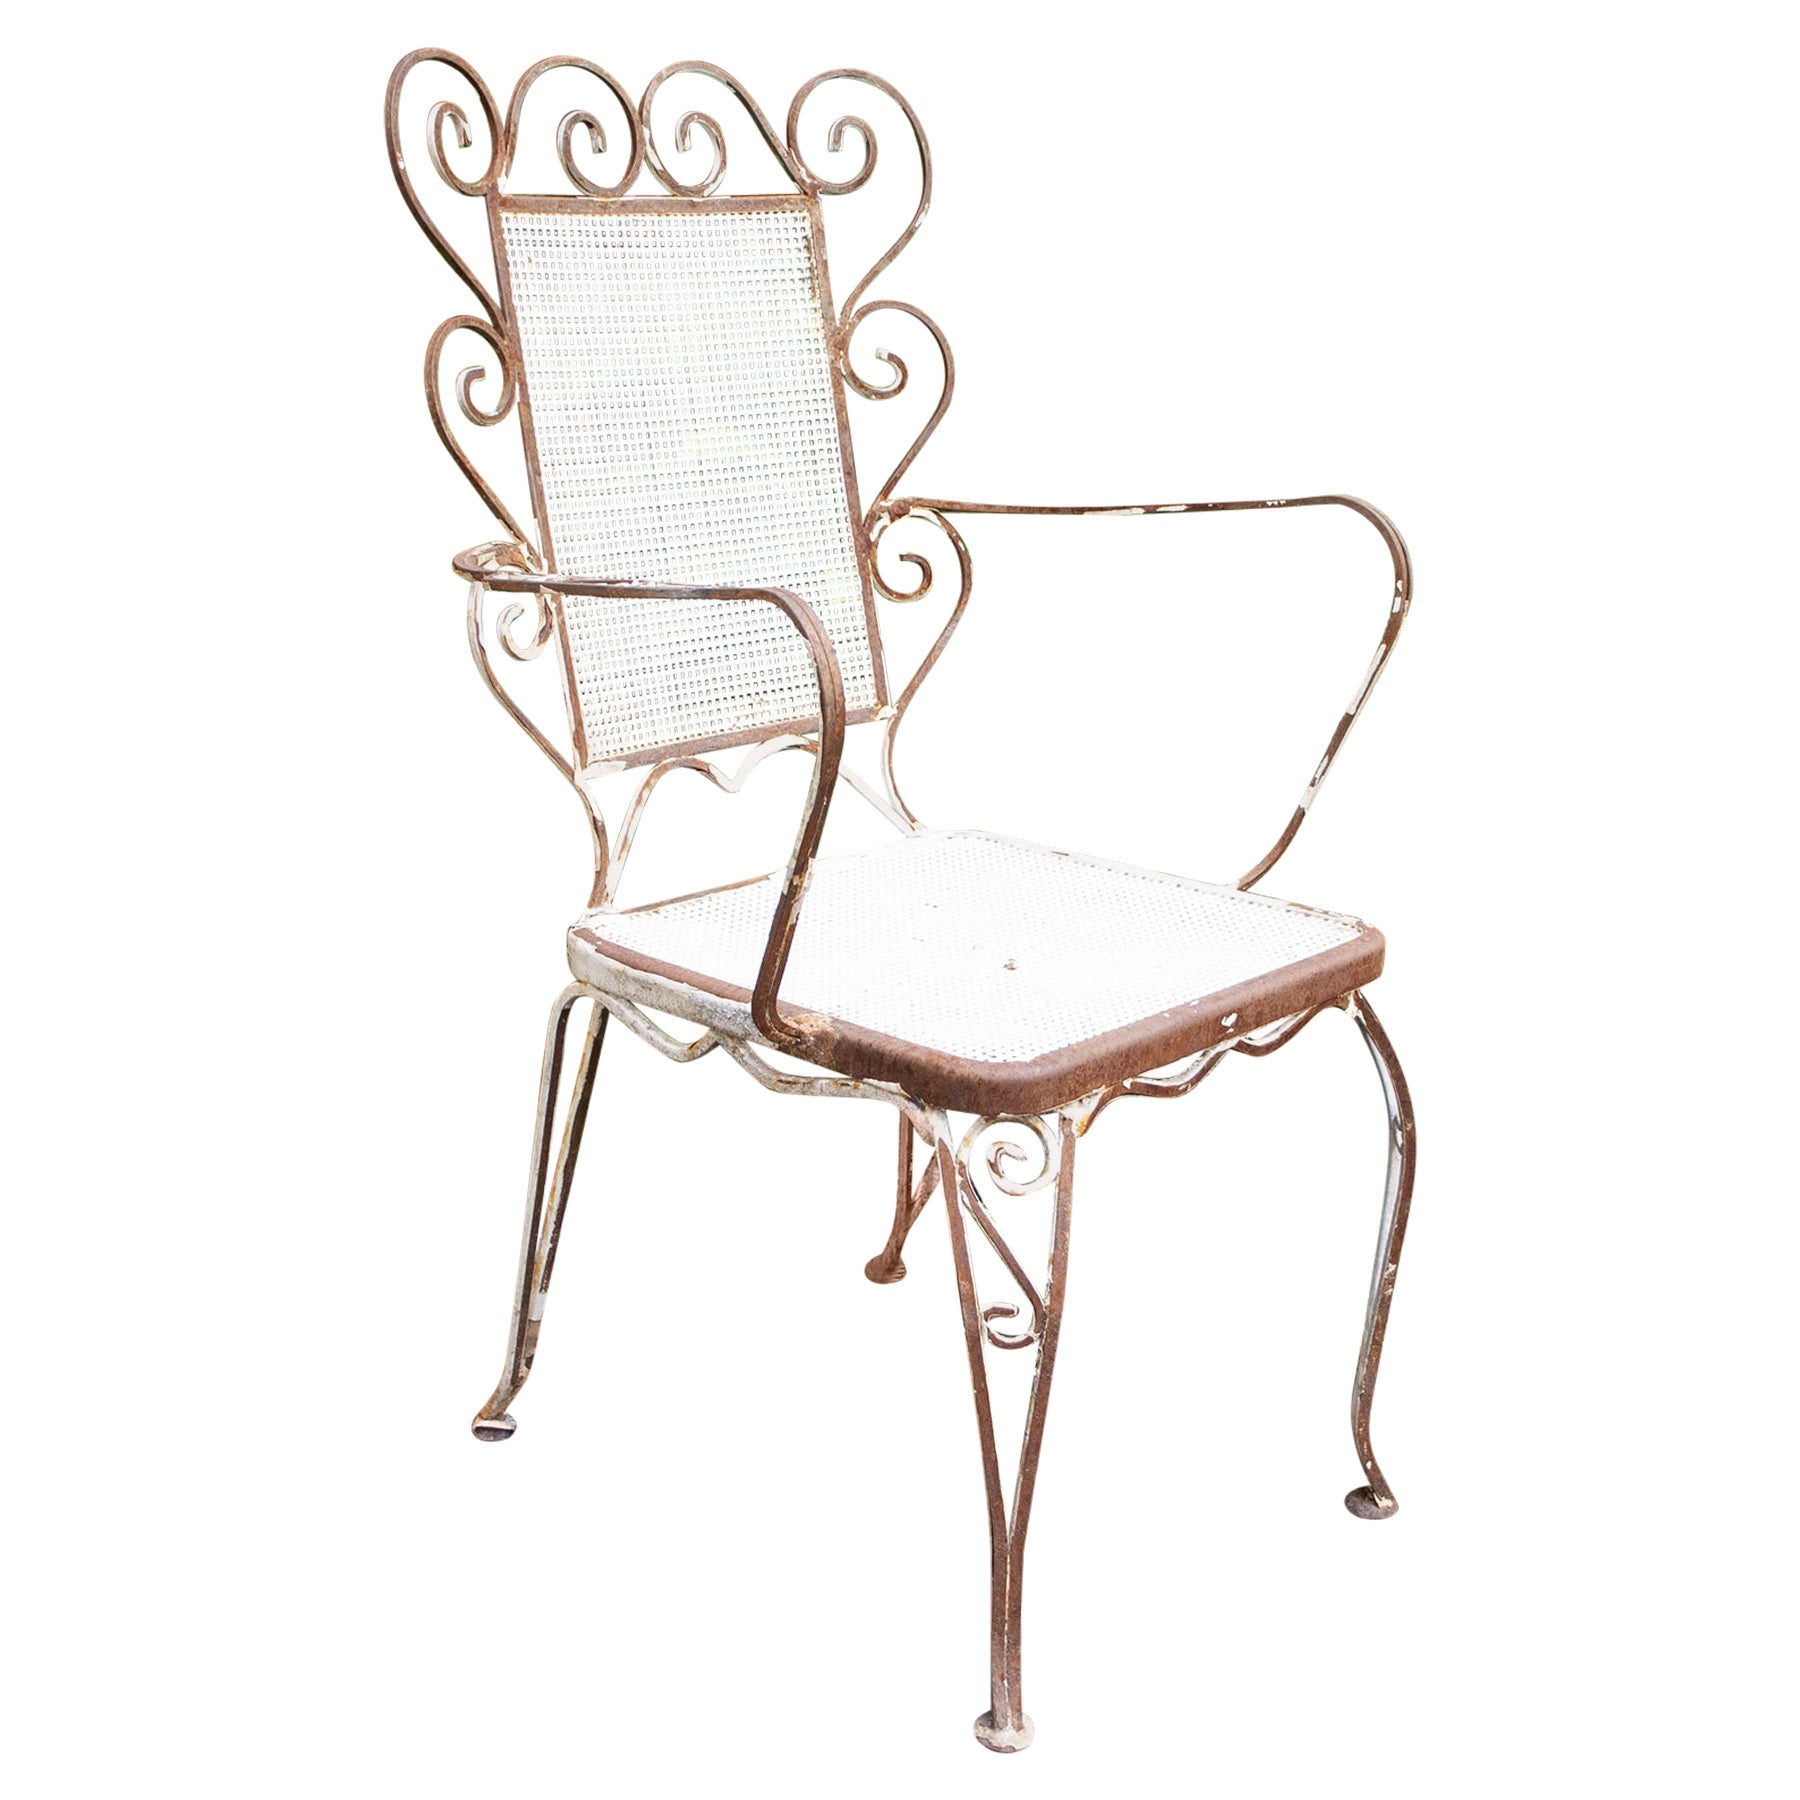 Wrought Iron Chairs from the 1950s Casa e Giardino